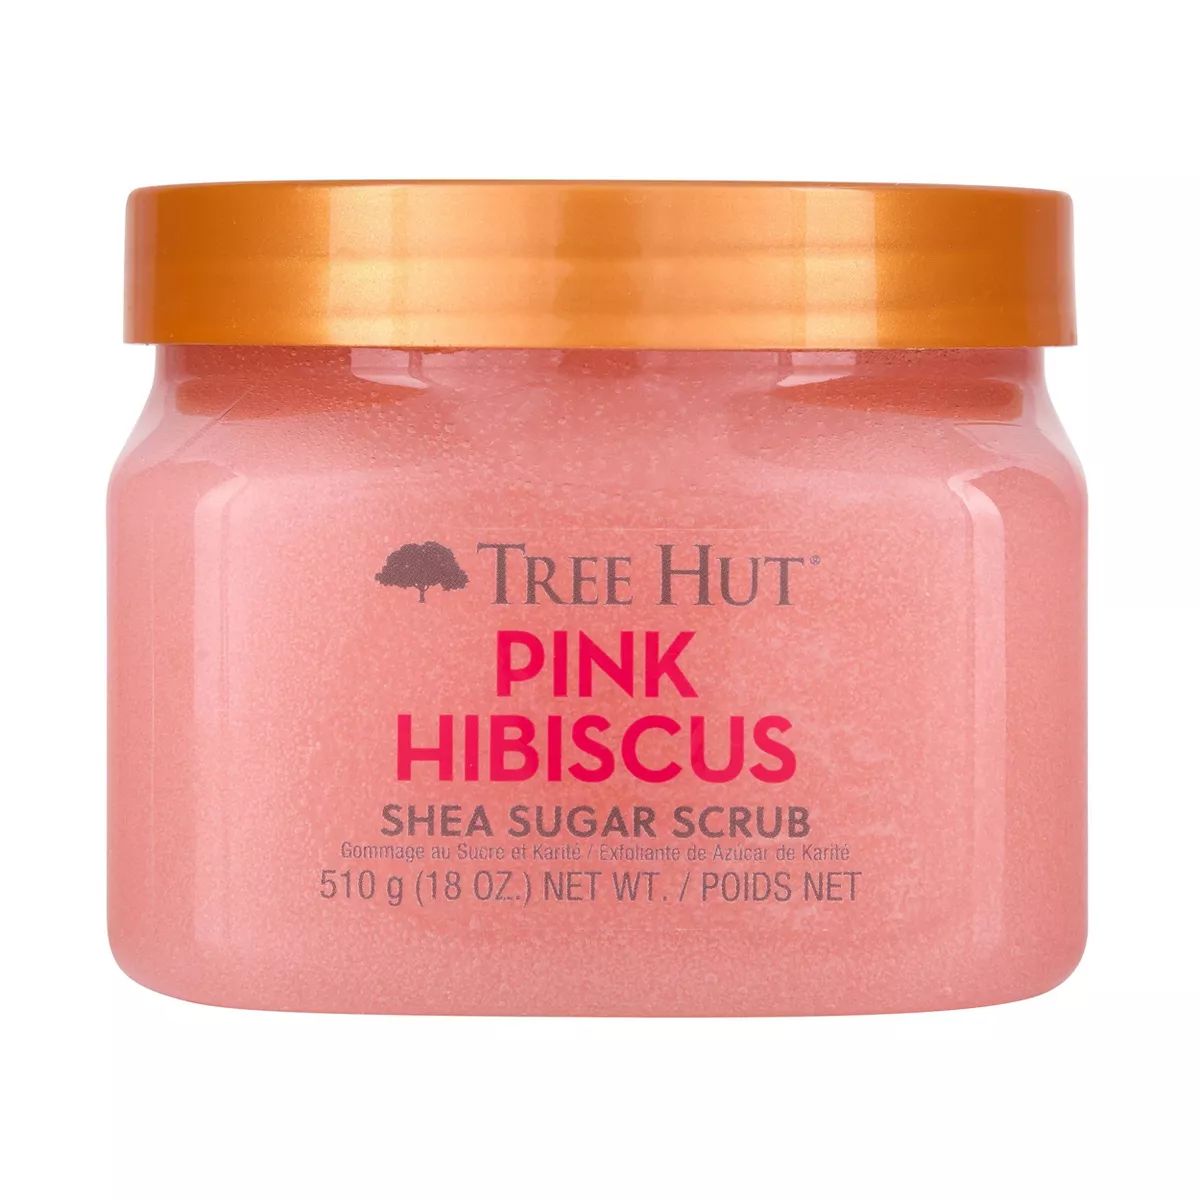 Tree Hut Pink Hibiscus Shea Sugar Body Scrub - 18oz | Target